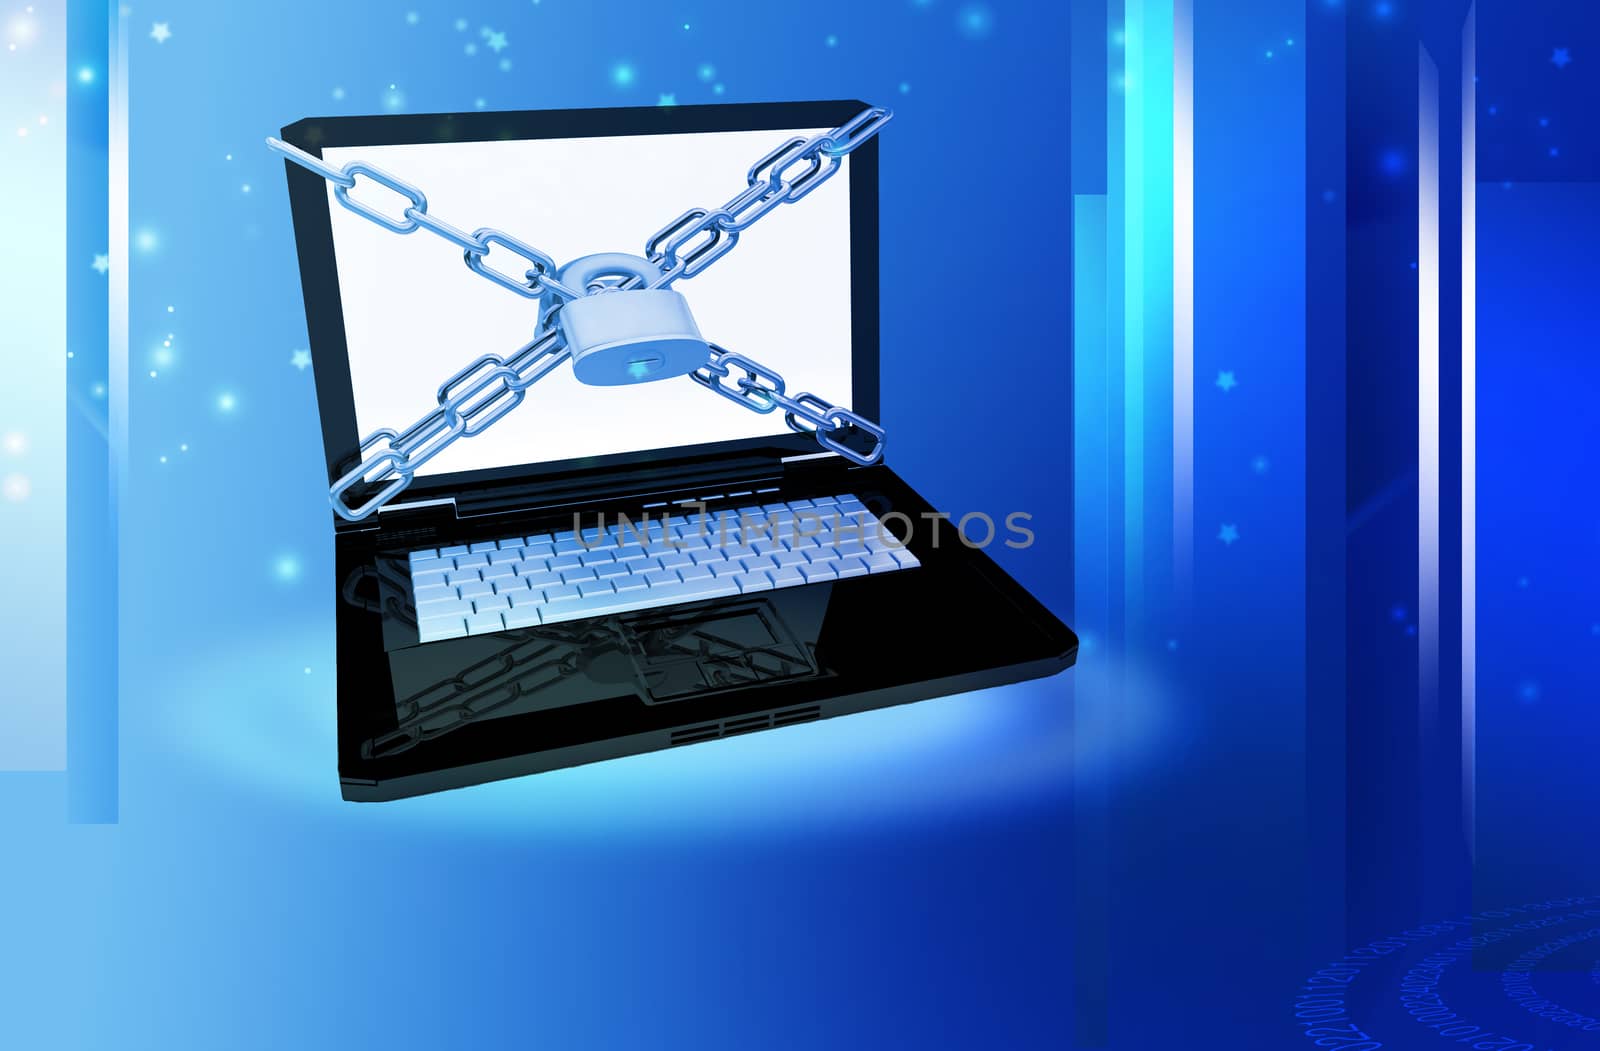 Laptop on a blue background